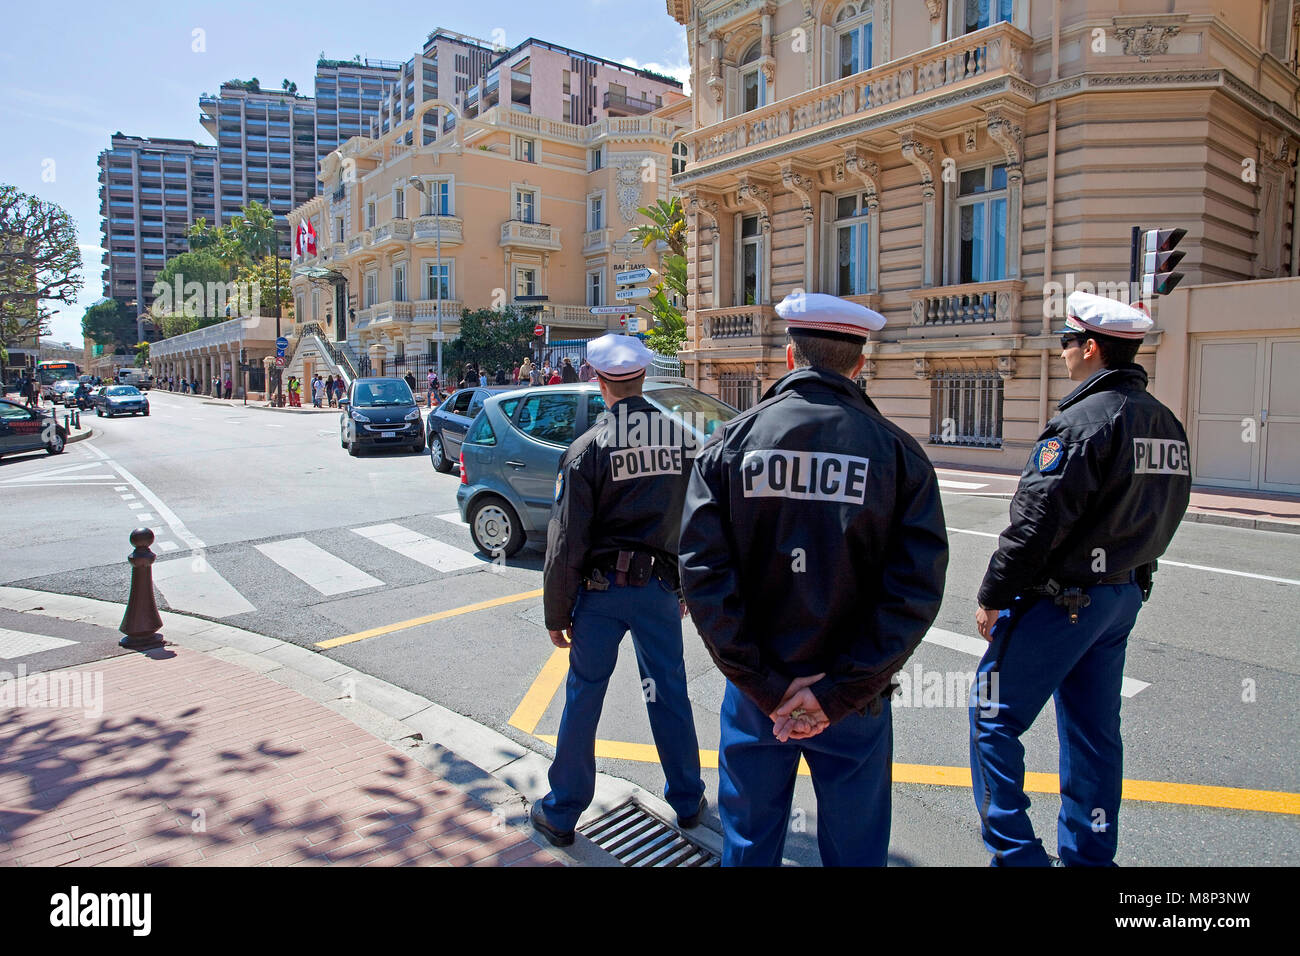 Police men at Boulevard des Moulin, Monte Carlo, Principality of Monaco, Côte d'Azur, french riviera, Europe Stock Photo